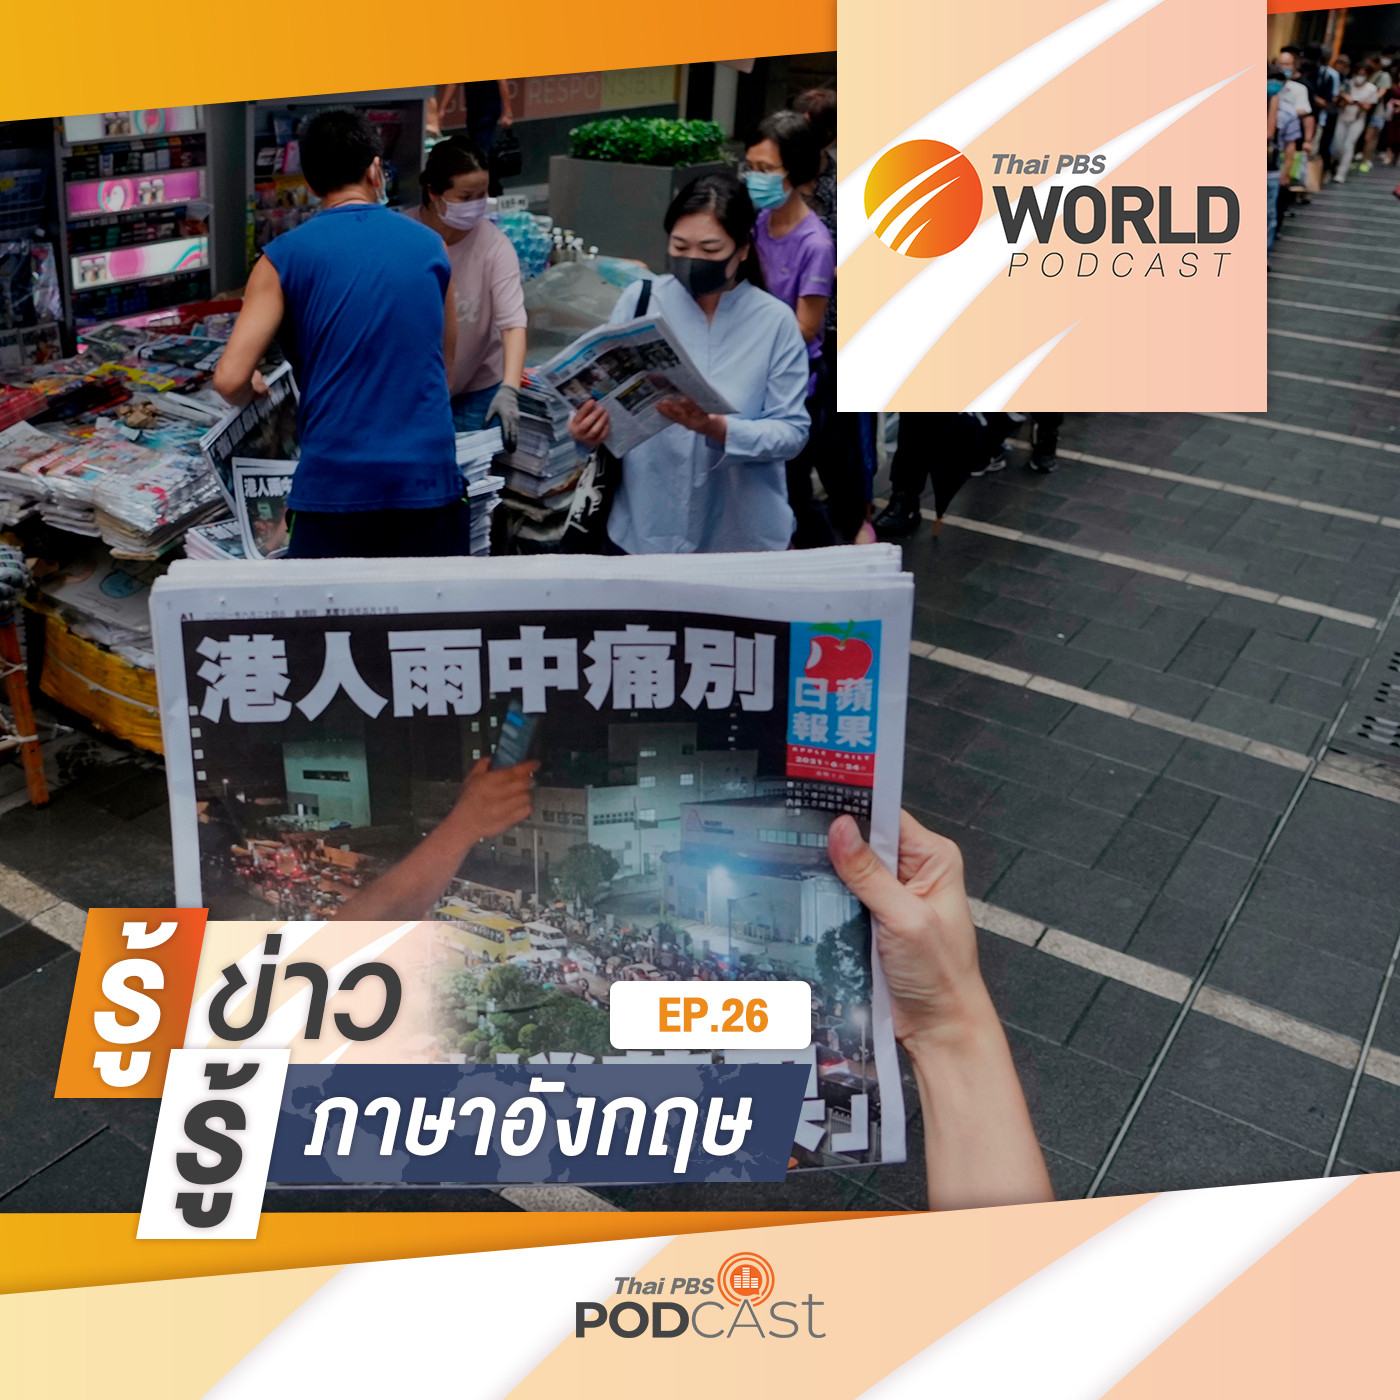 Thai PBS World Podcast - รู้ข่าว รู้ภาษาอังกฤษ EP. 26: ปิดฉาก "แอปเปิลเดลี่" สื่อหนุนประชาธิปไตยในฮ่องกง